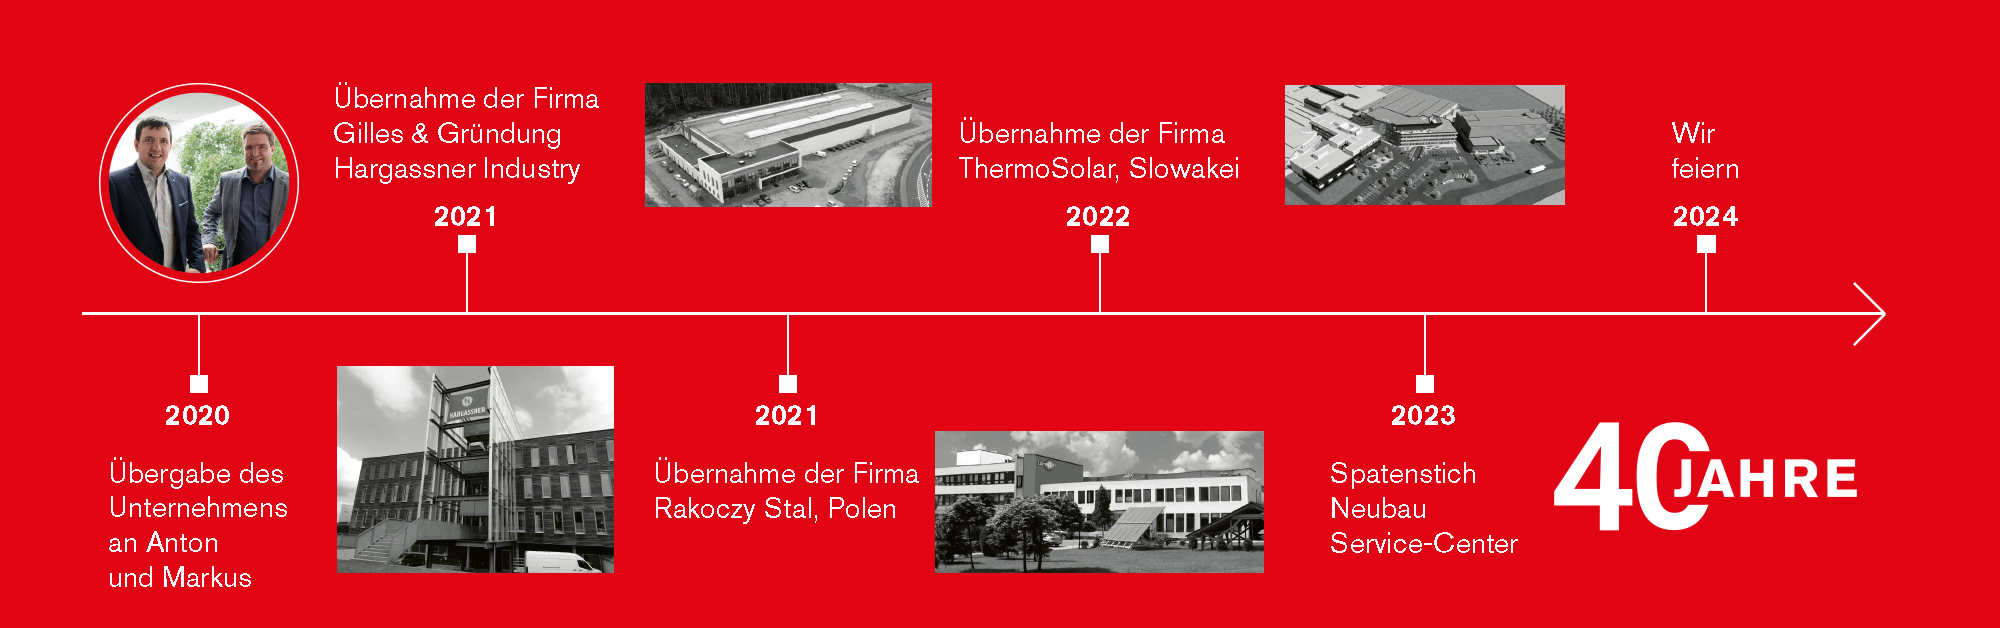 Hargassner Geschichte Timeline 2020 bis 2024 | Hargassner